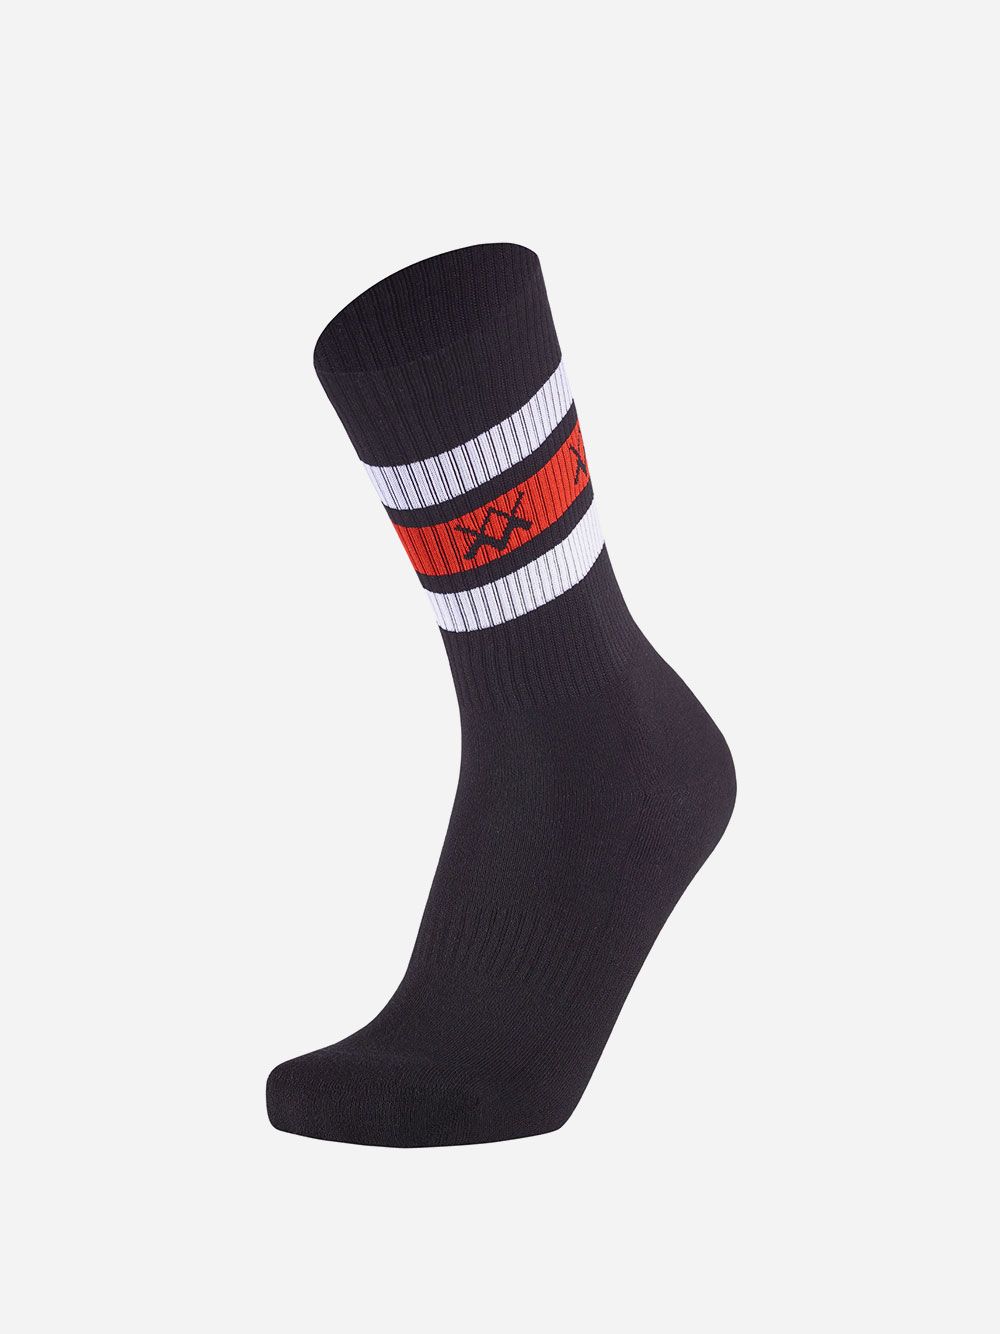 Black Socks Stripes WM | Westmister